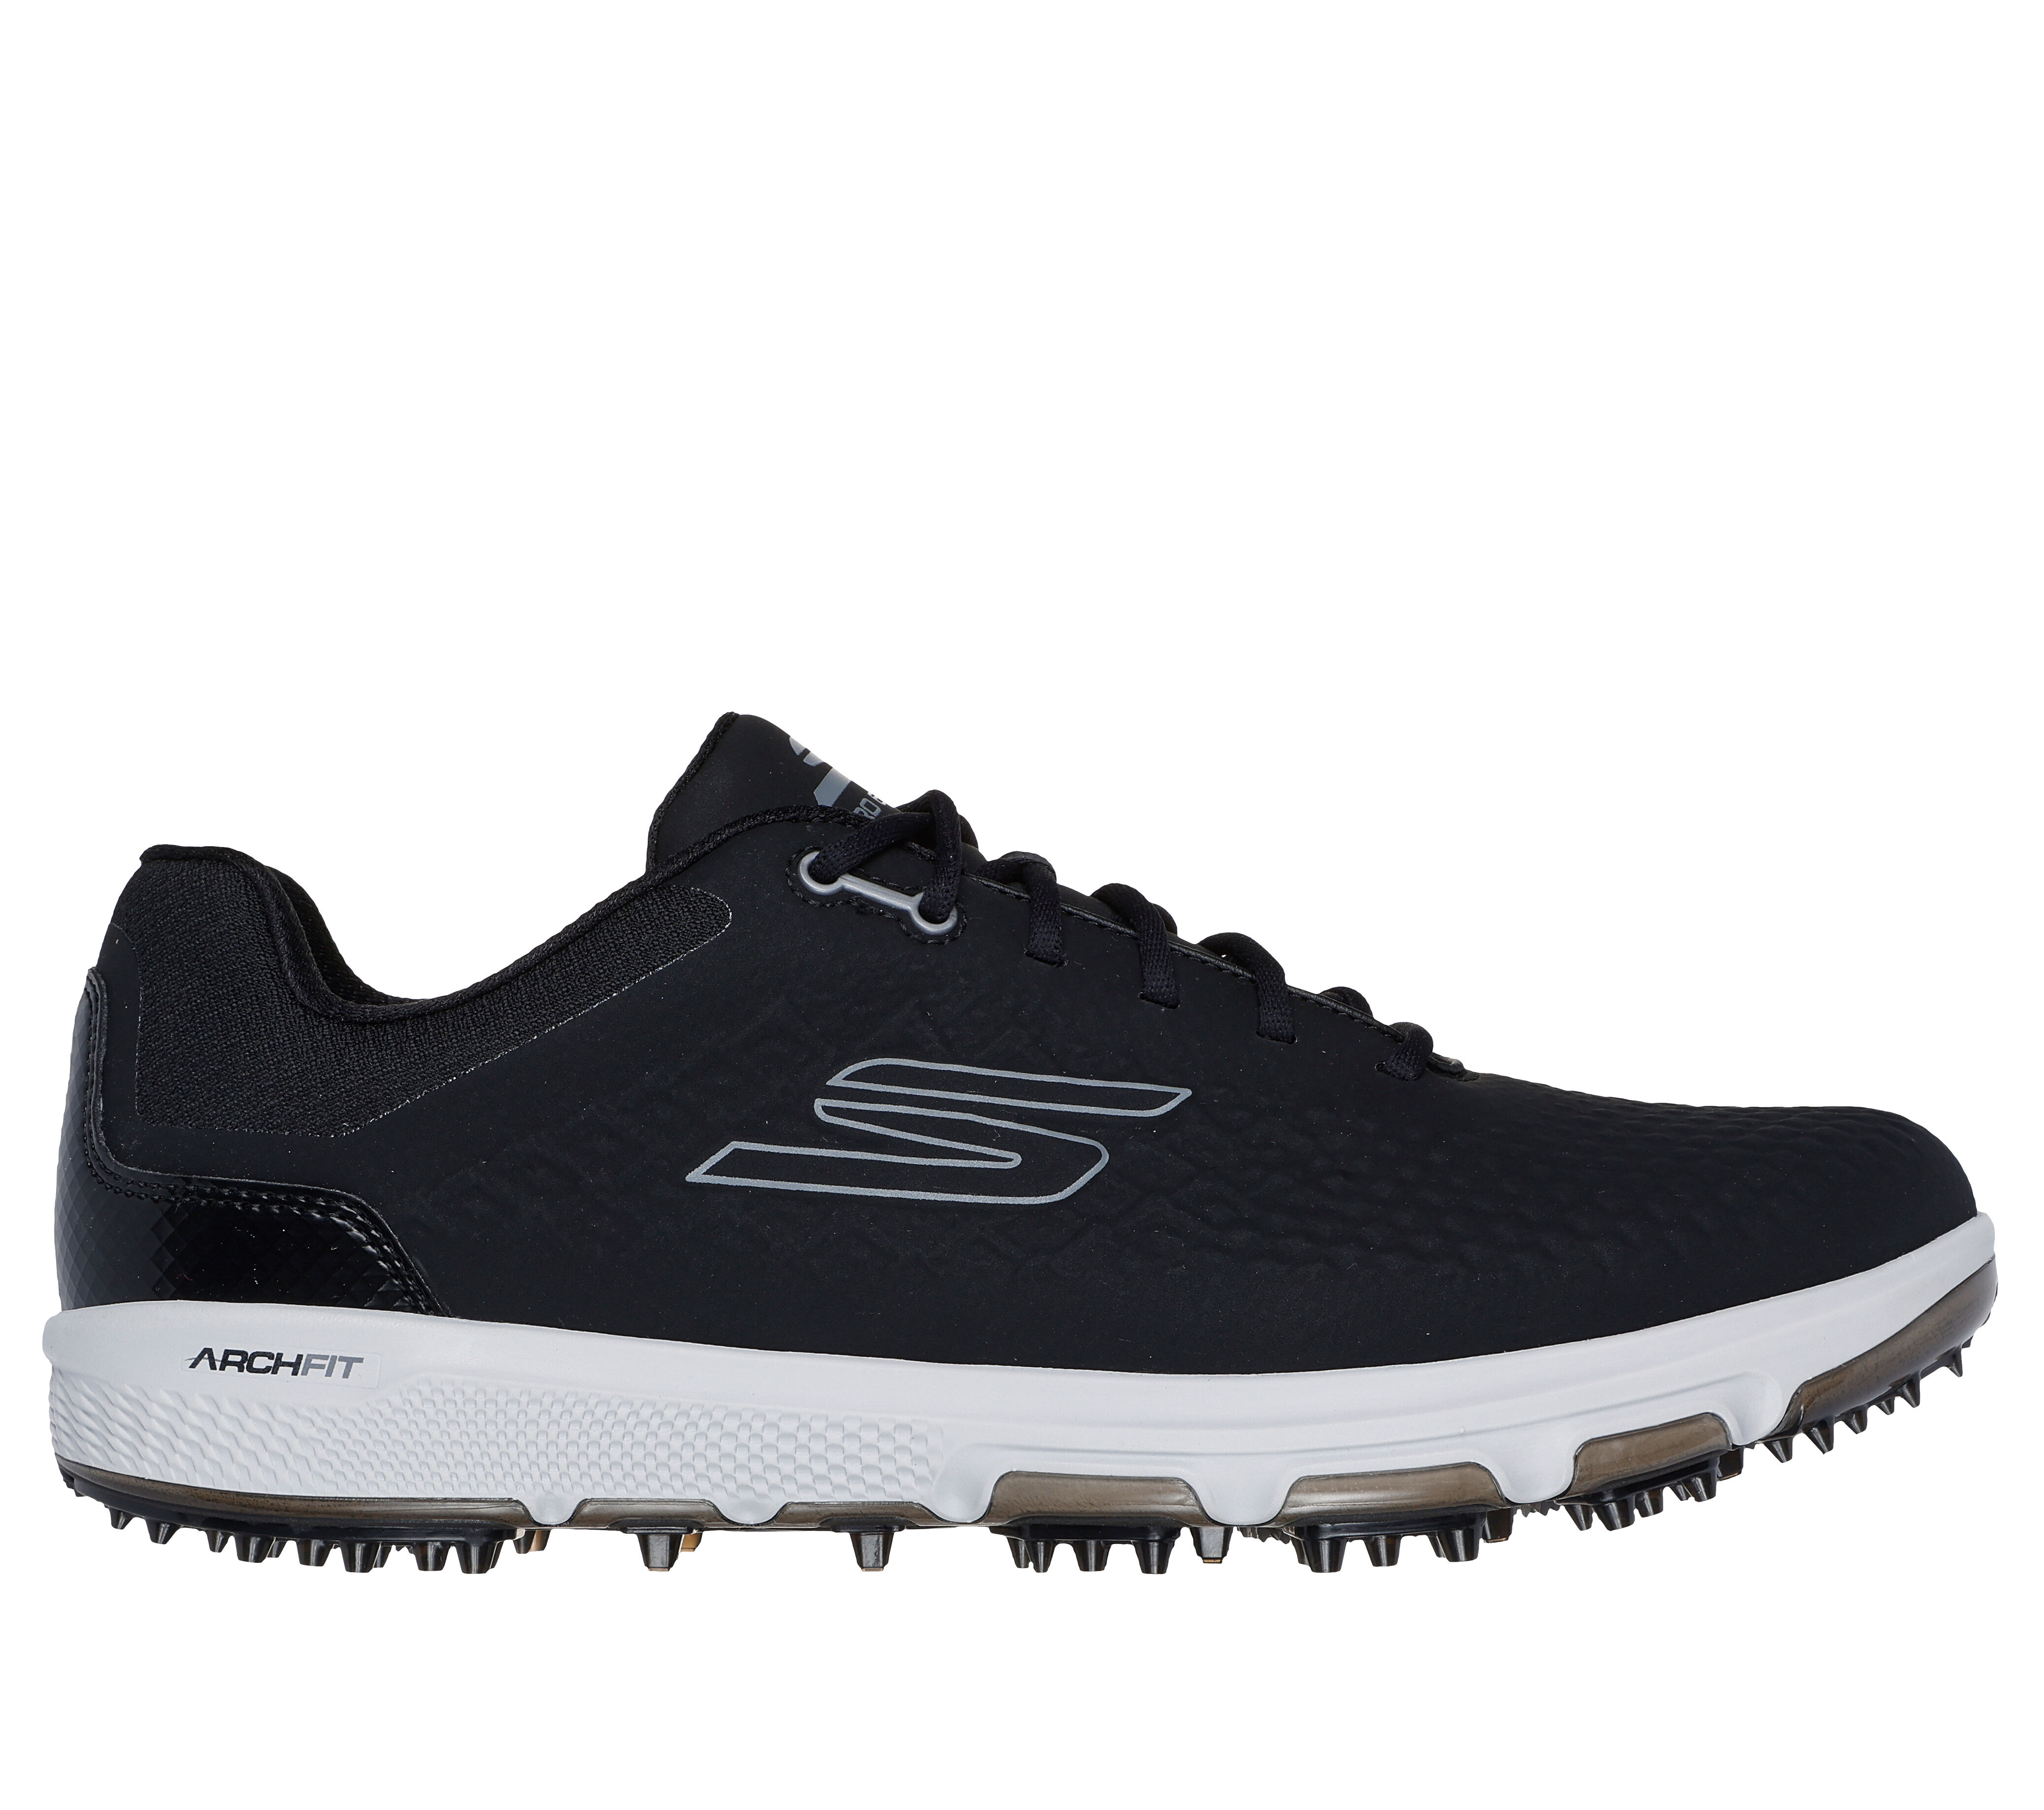 Skechers Men´s Max 2 Arch Fit Waterproof Spikeless Golf Shoe